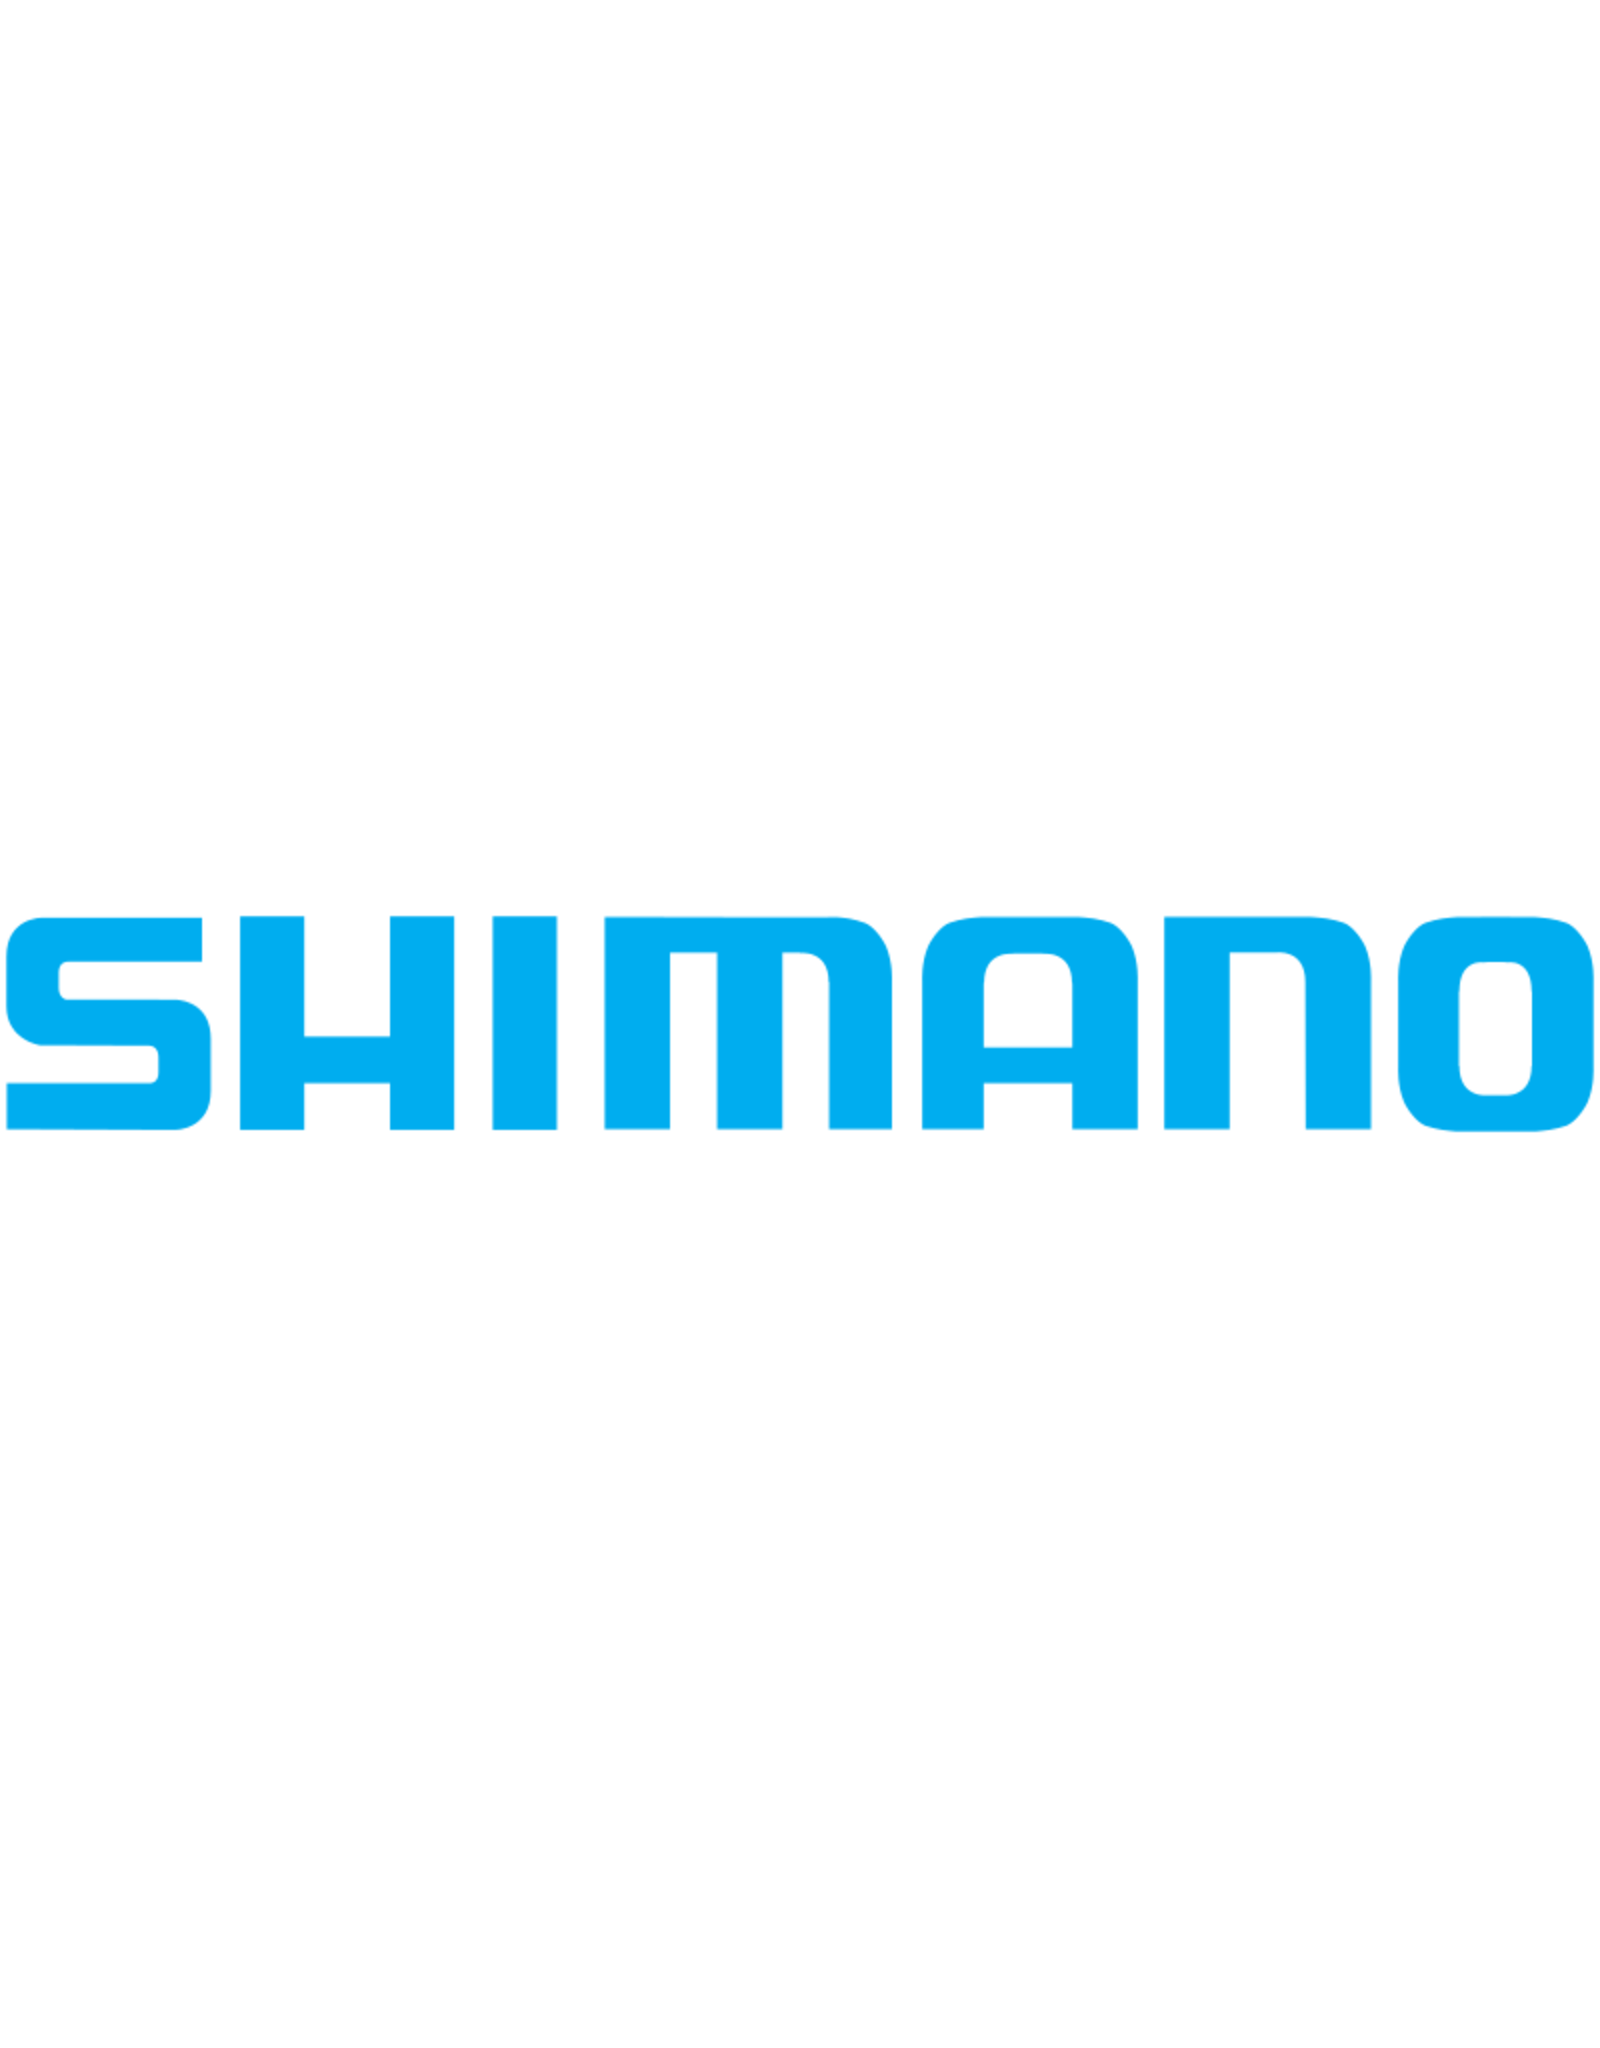 Shimano RD17820  WASHER